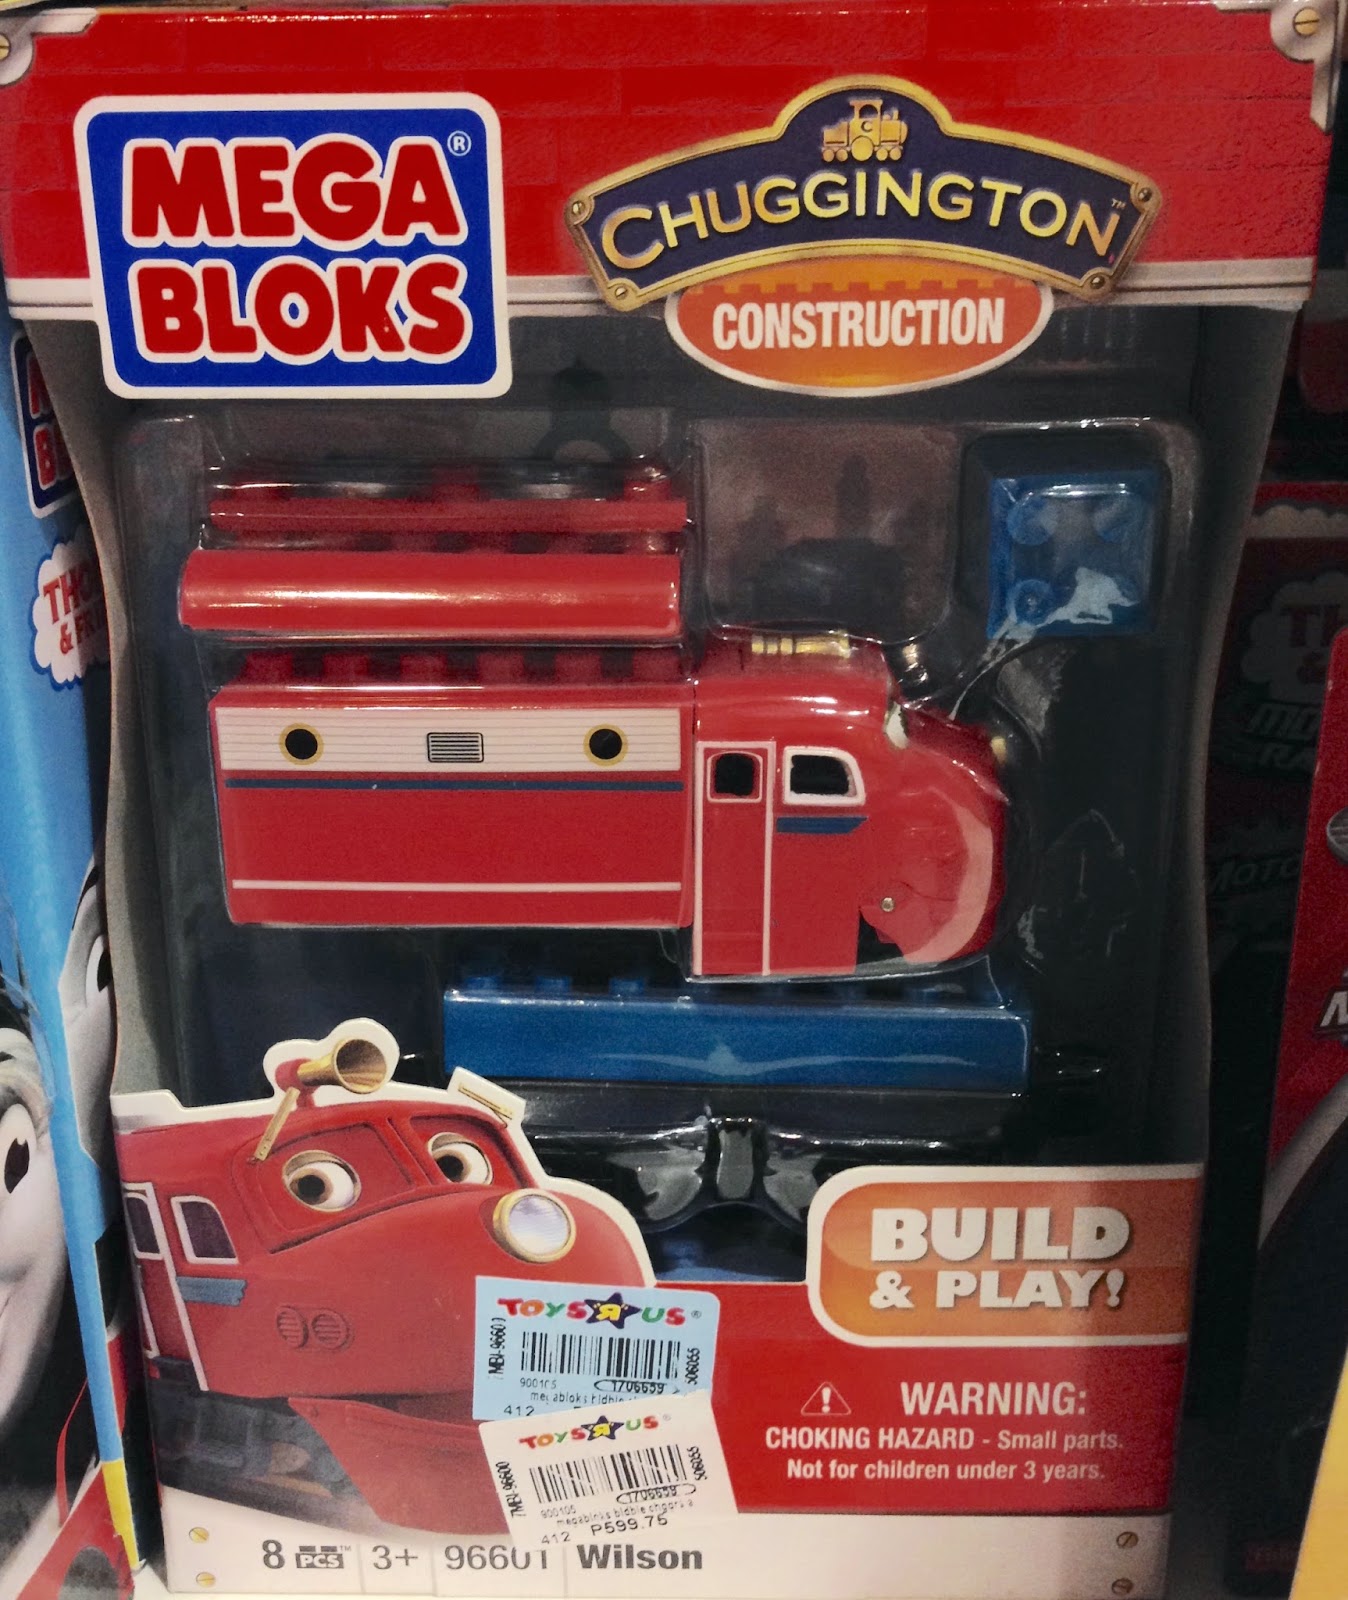 Mega Bloks Chuggington Trains Toy Sale - Wilson